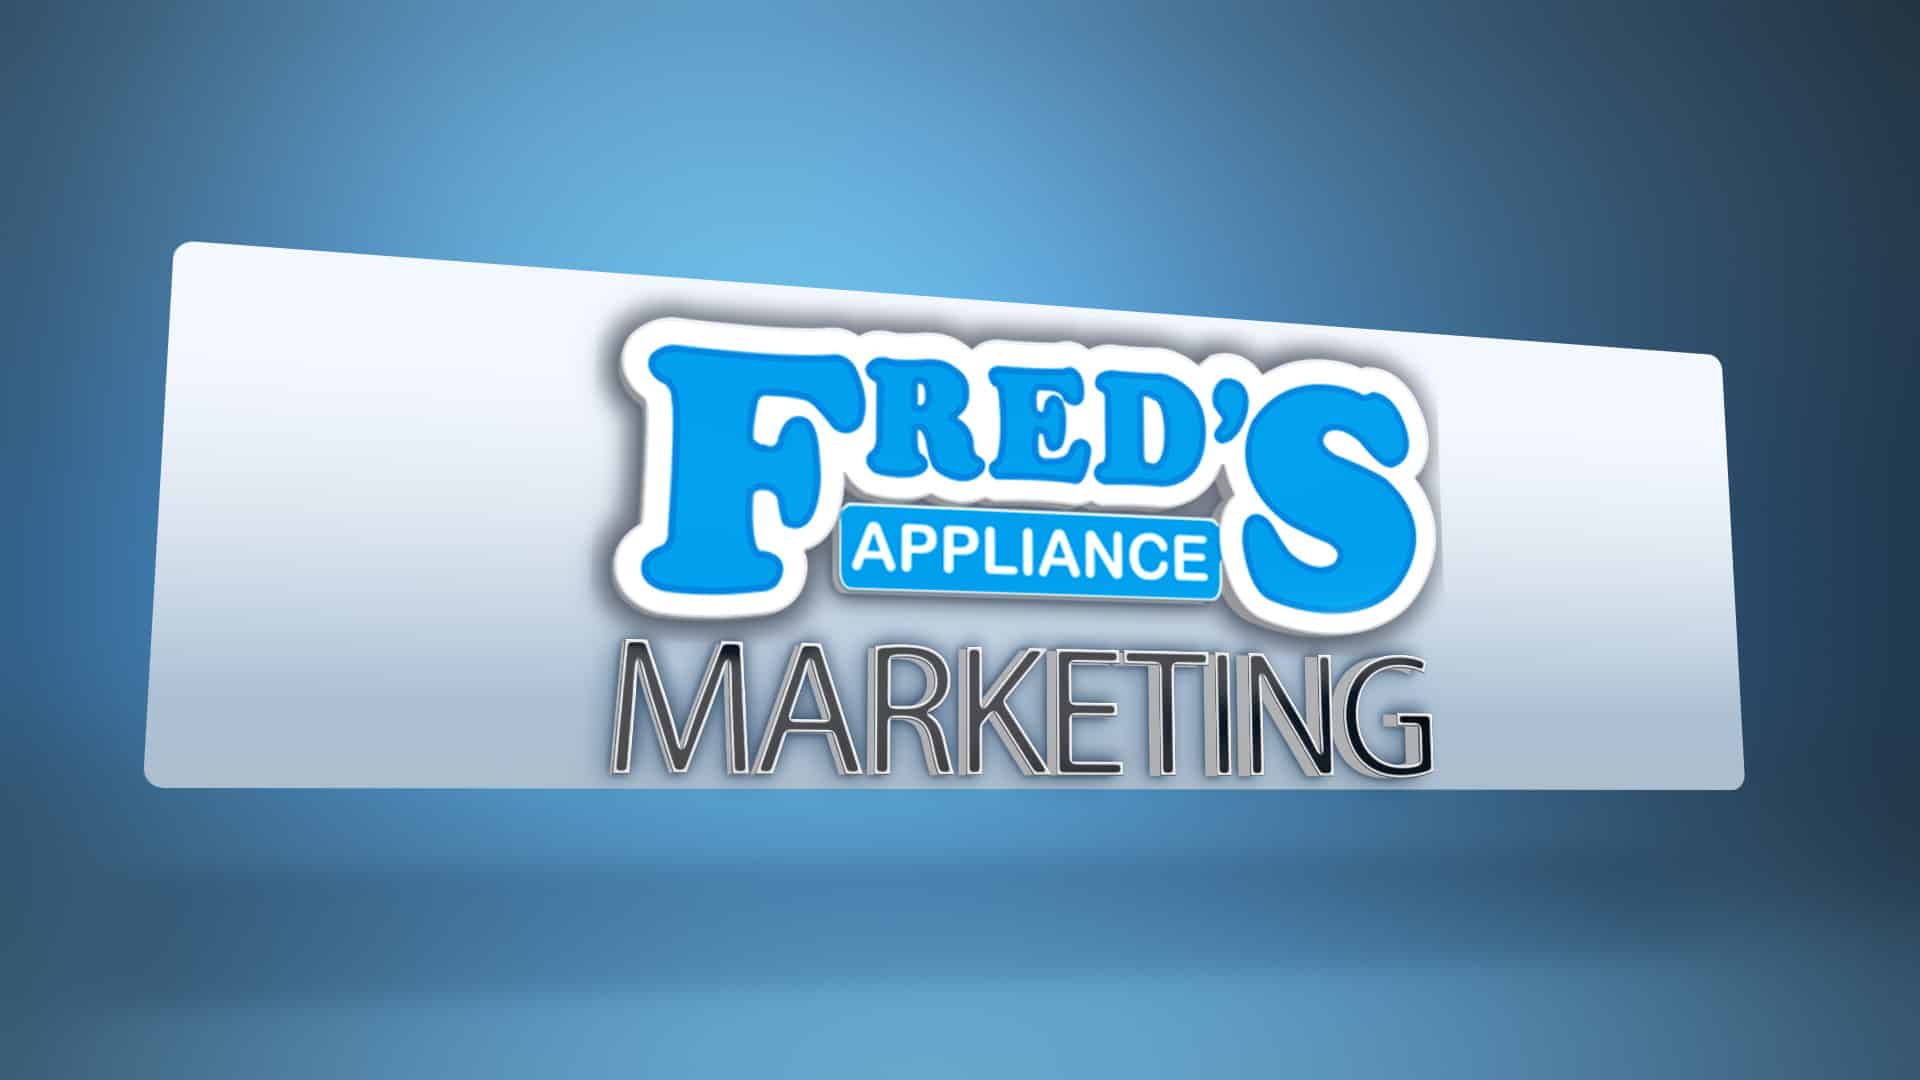 freds appliance marketing